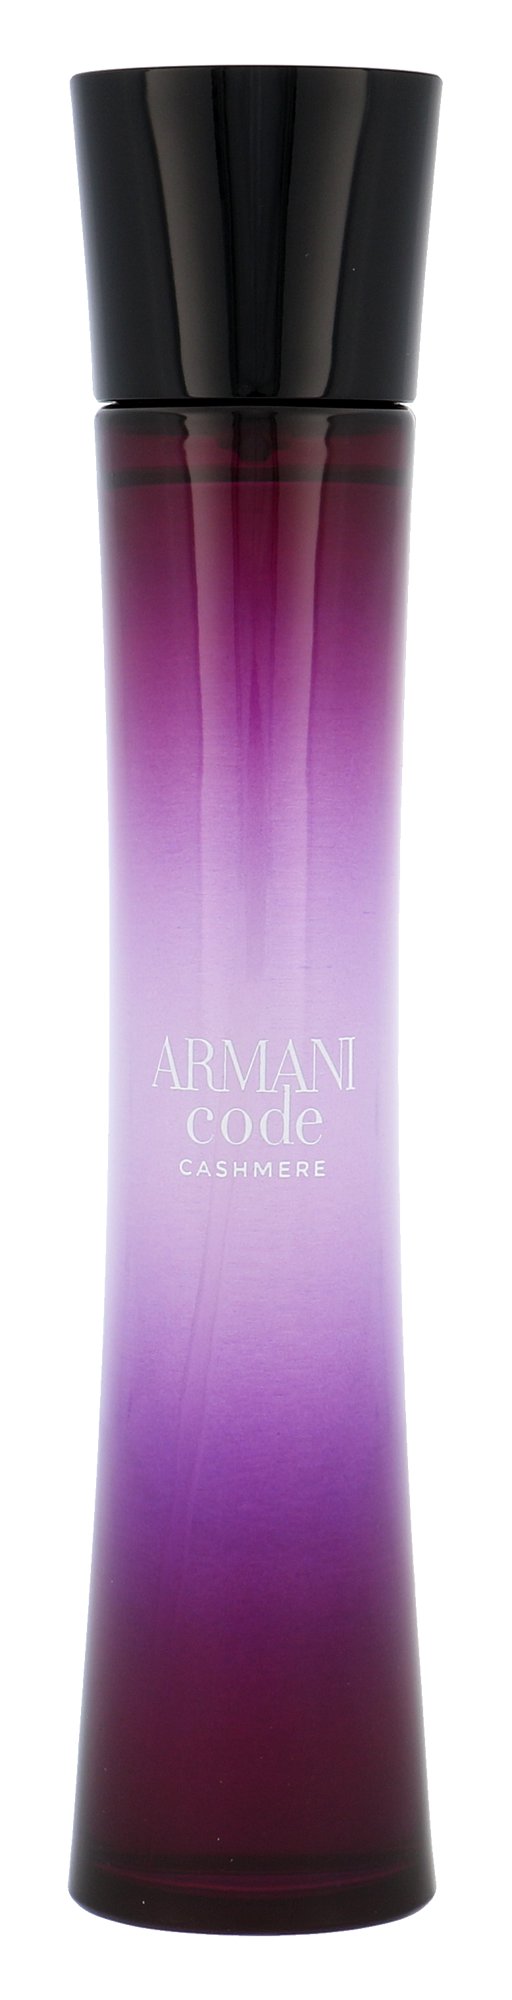 Giorgio Armani Code Cashmere, Parfumovaná voda 35ml - Tester